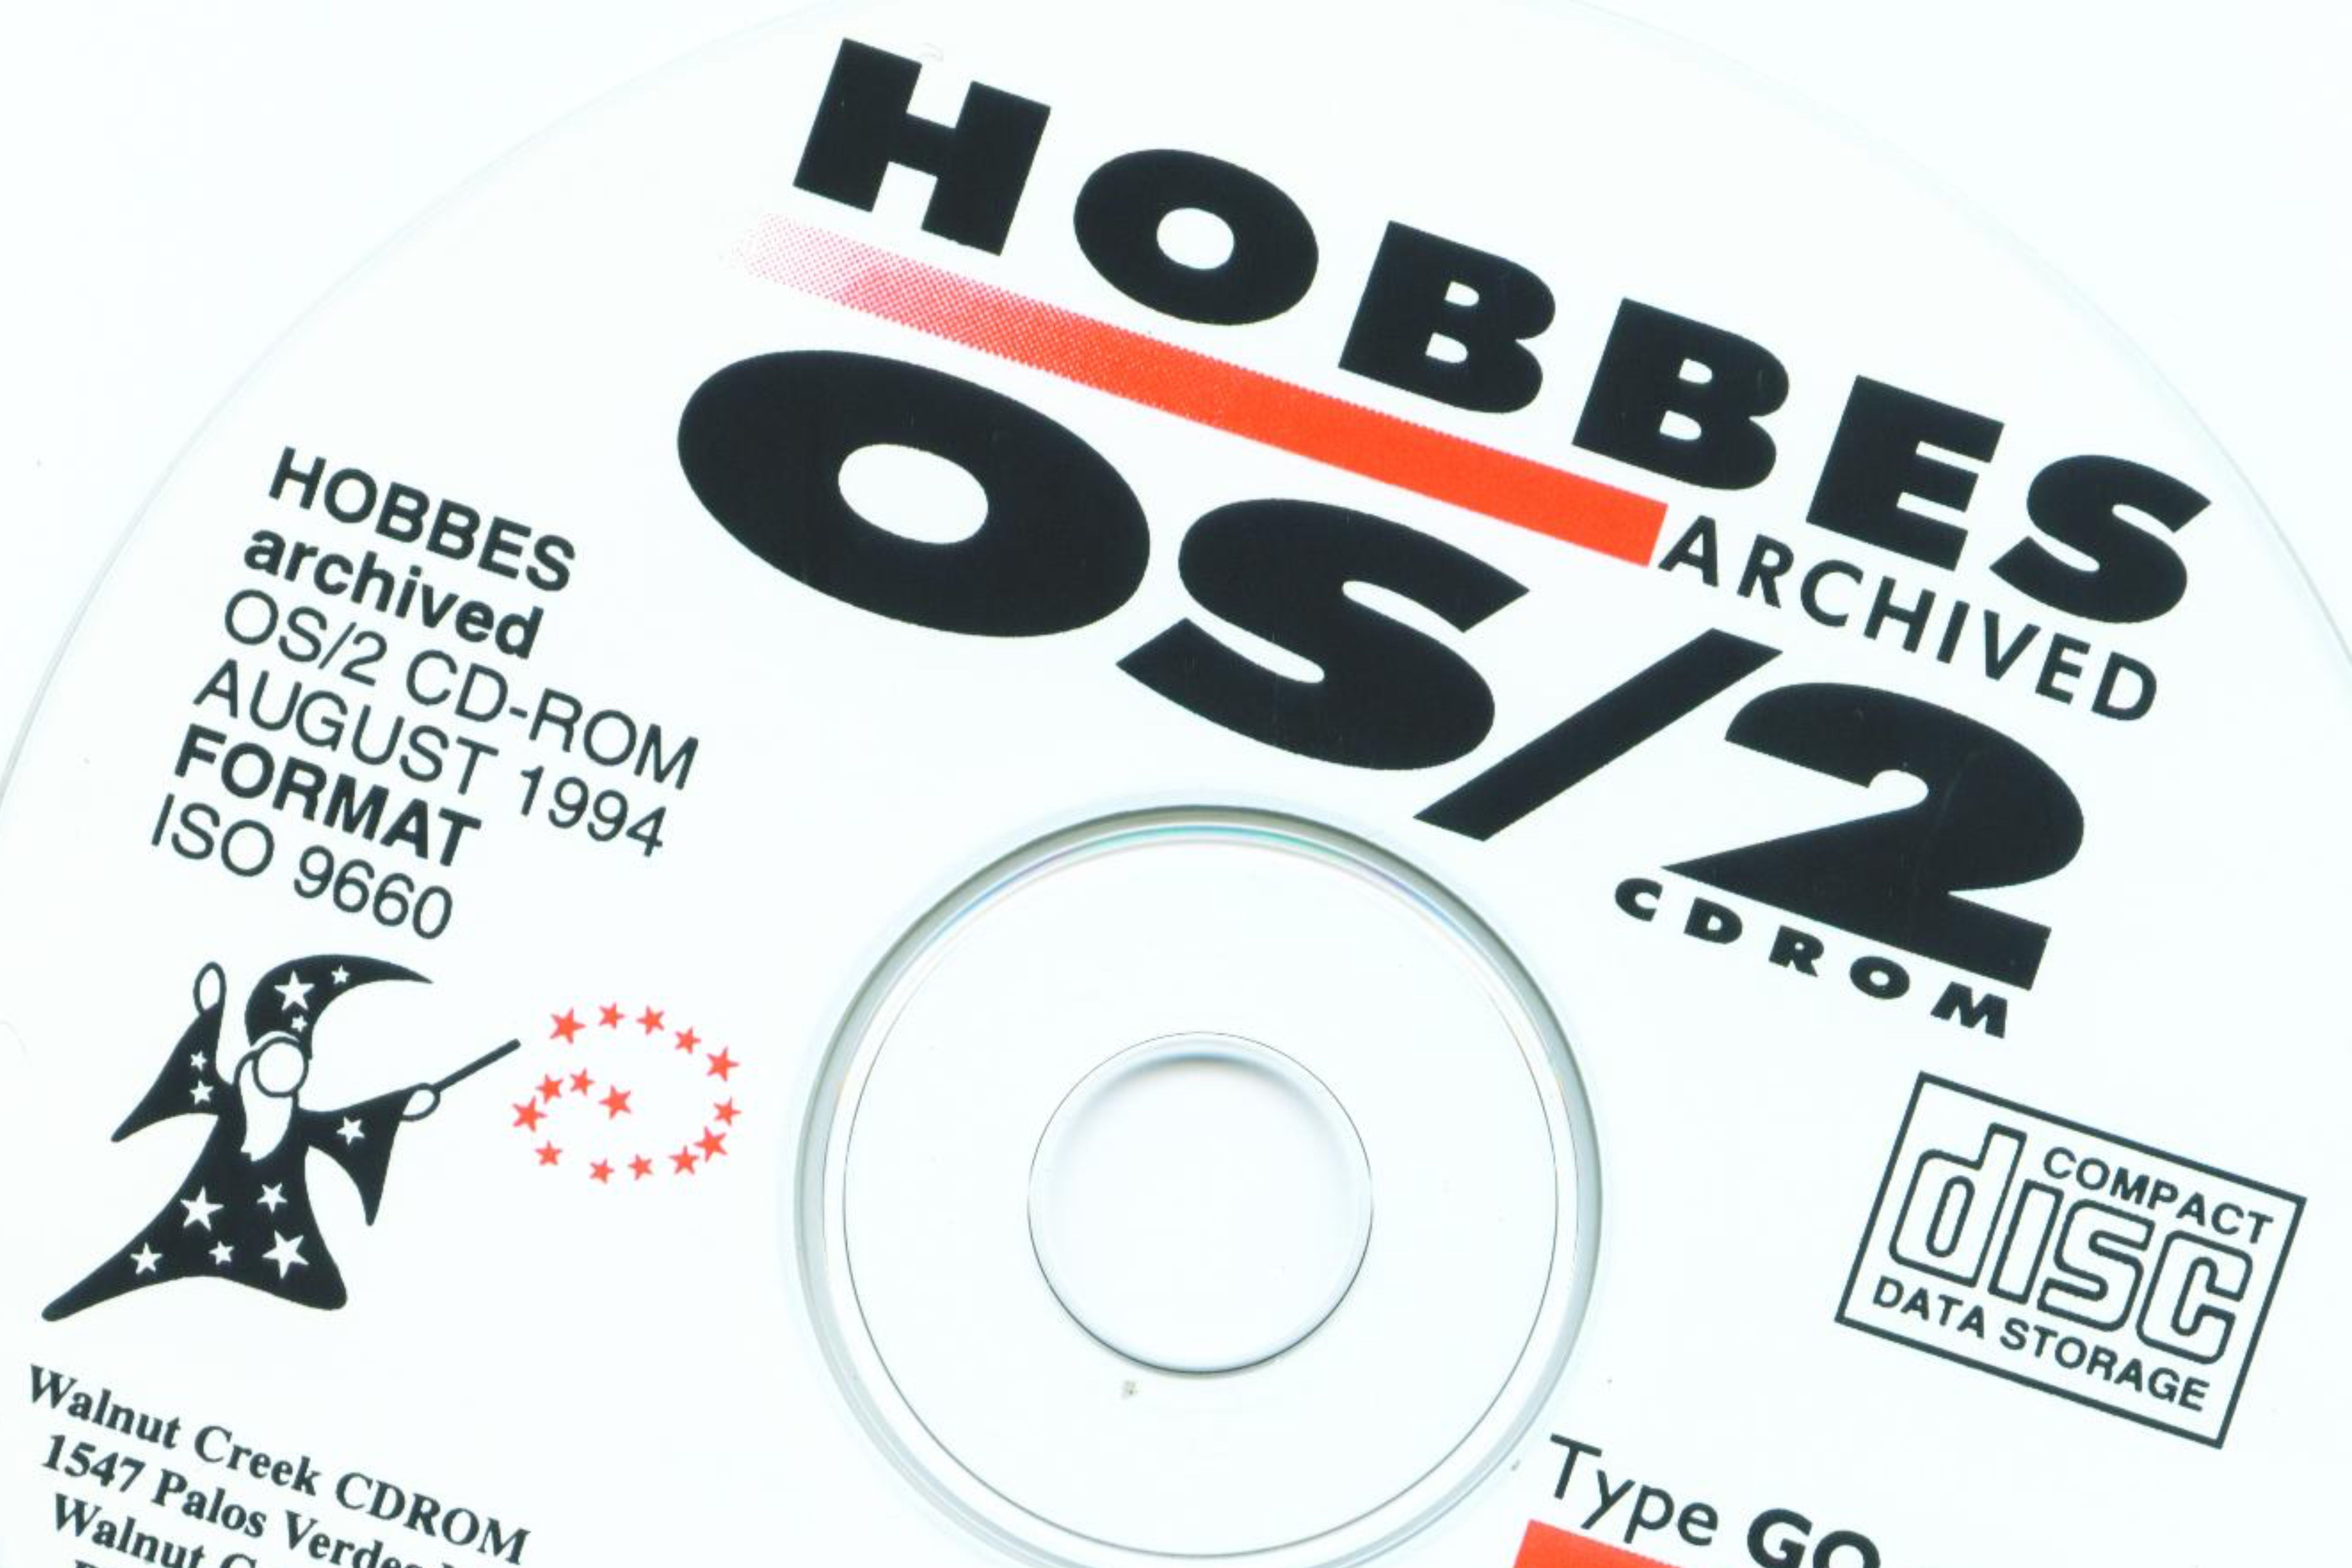 Hobbes-OS-2-Archive-CD-ROM